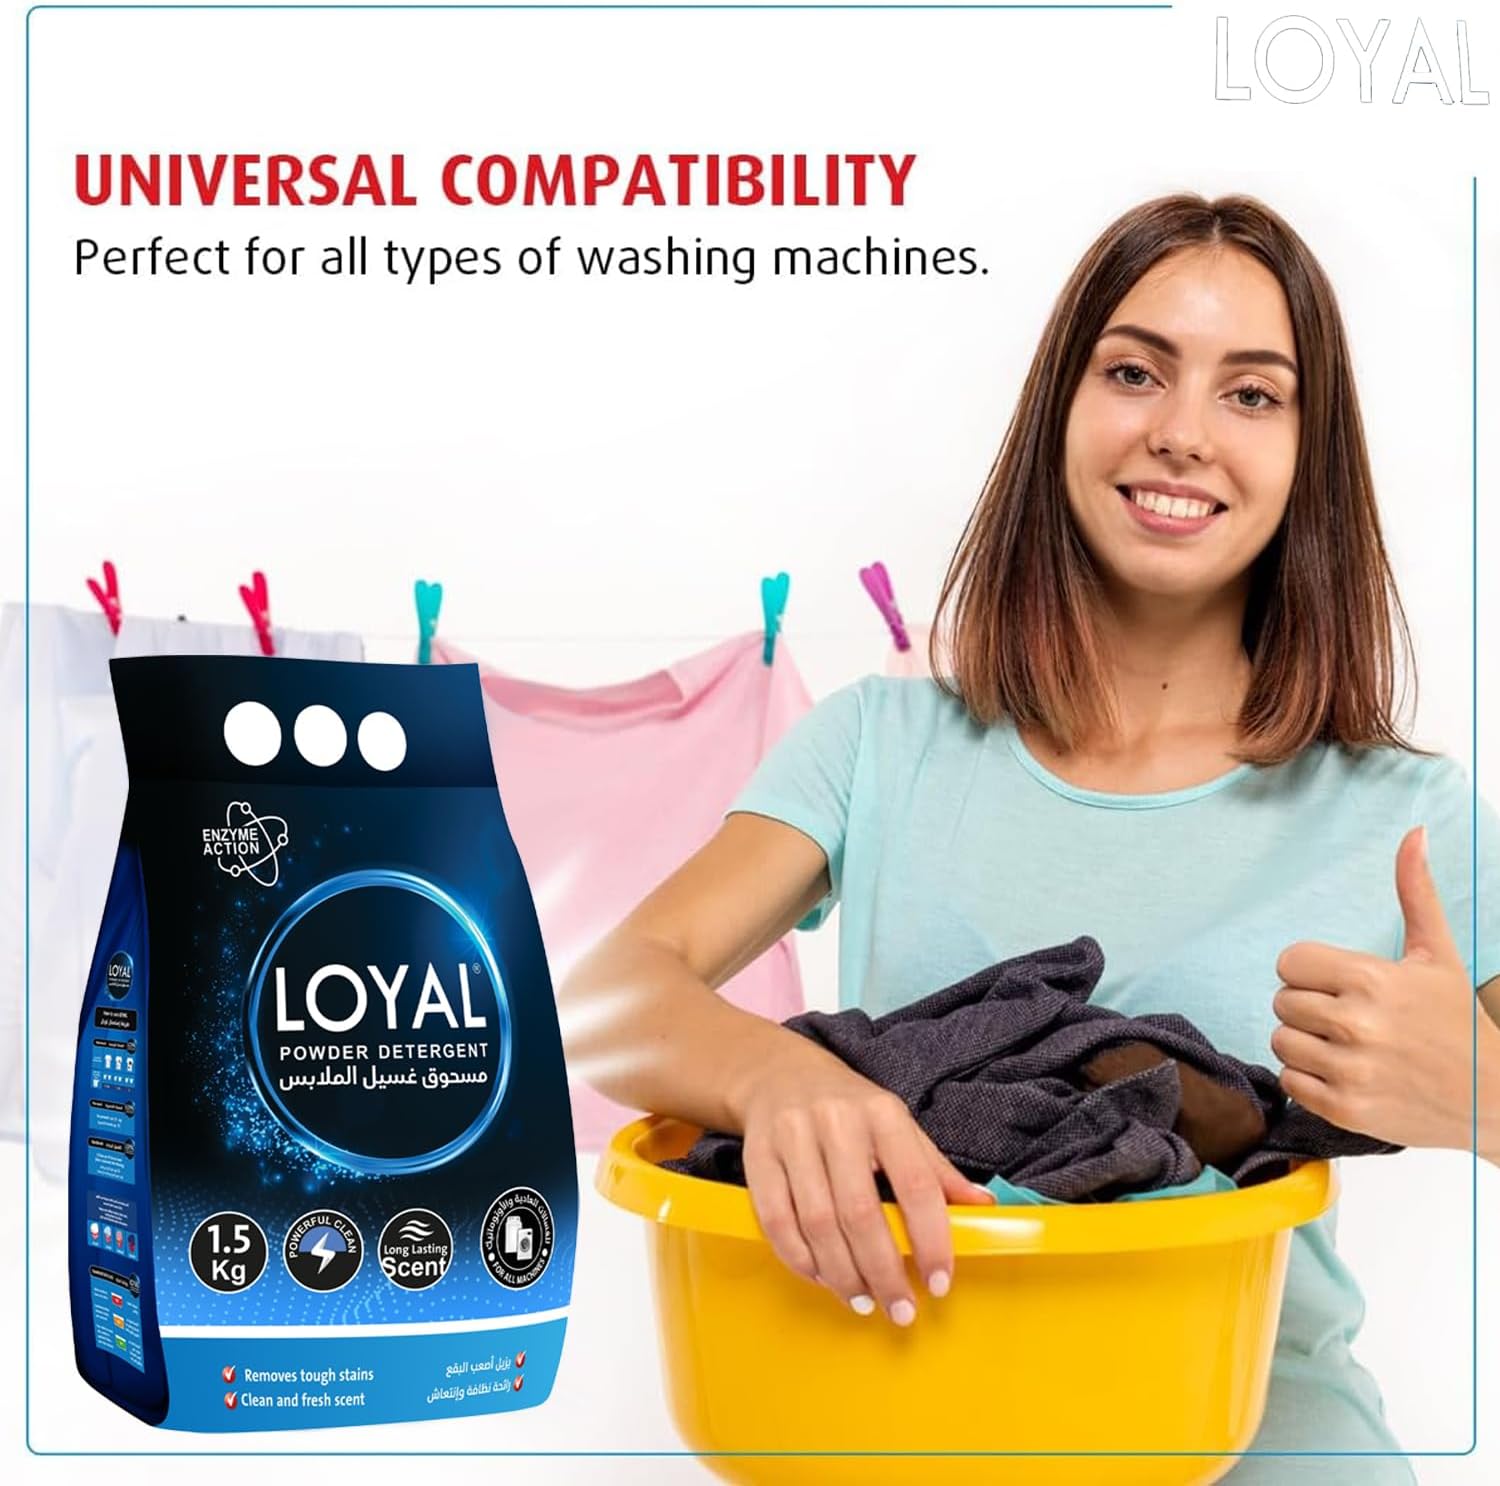 Loyal Powder Detergent 1.5KG